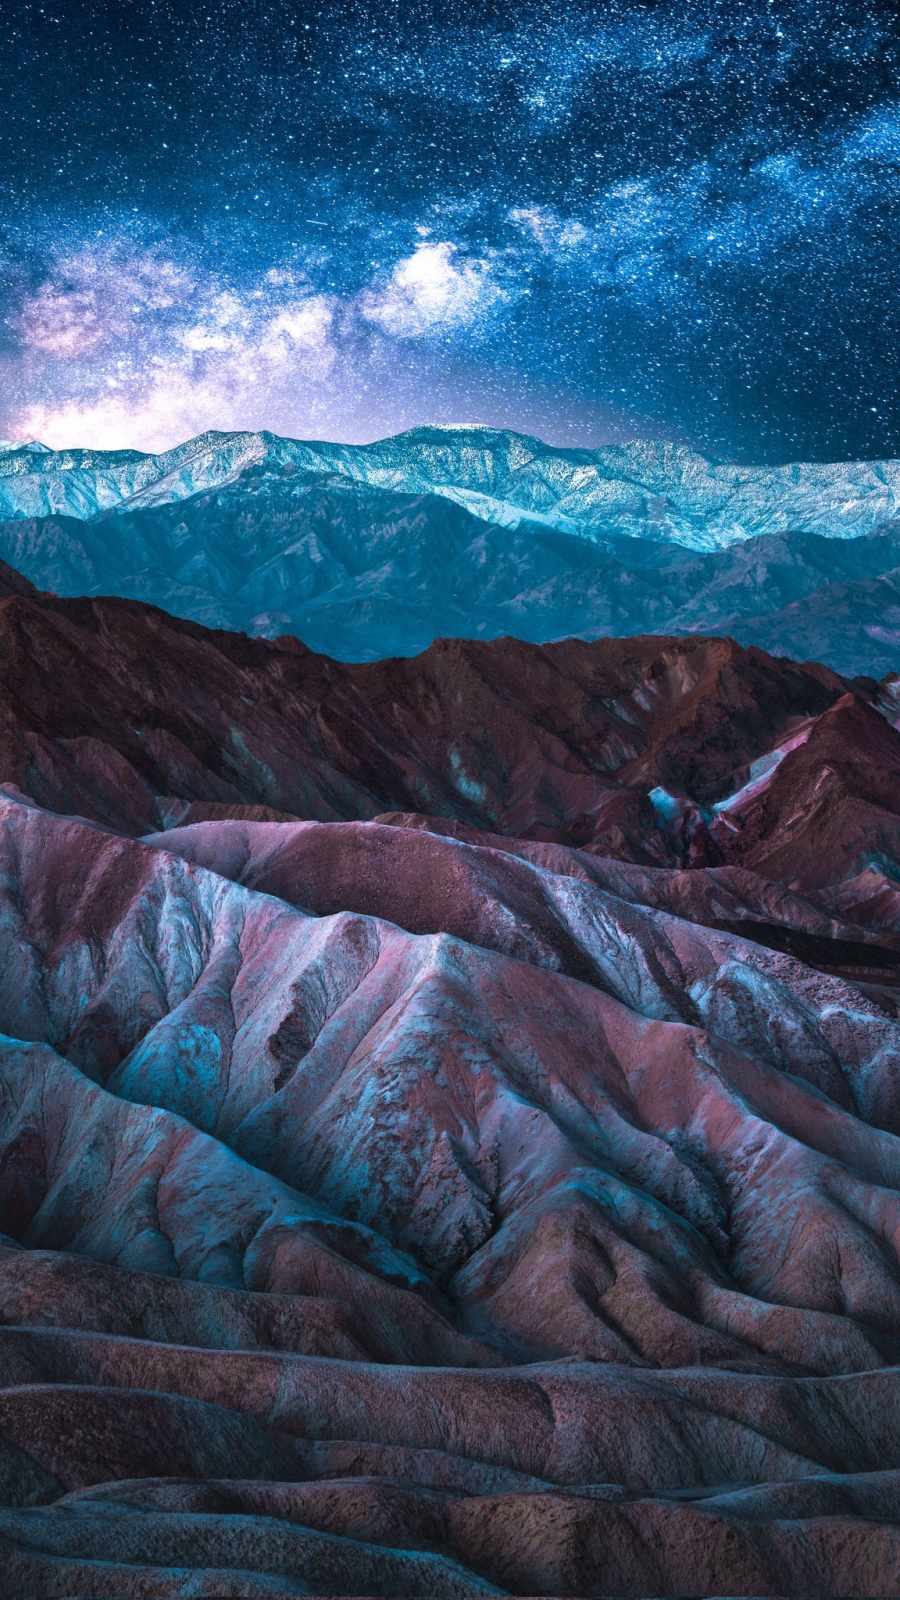 Night Mountains iPhone Wallpaper